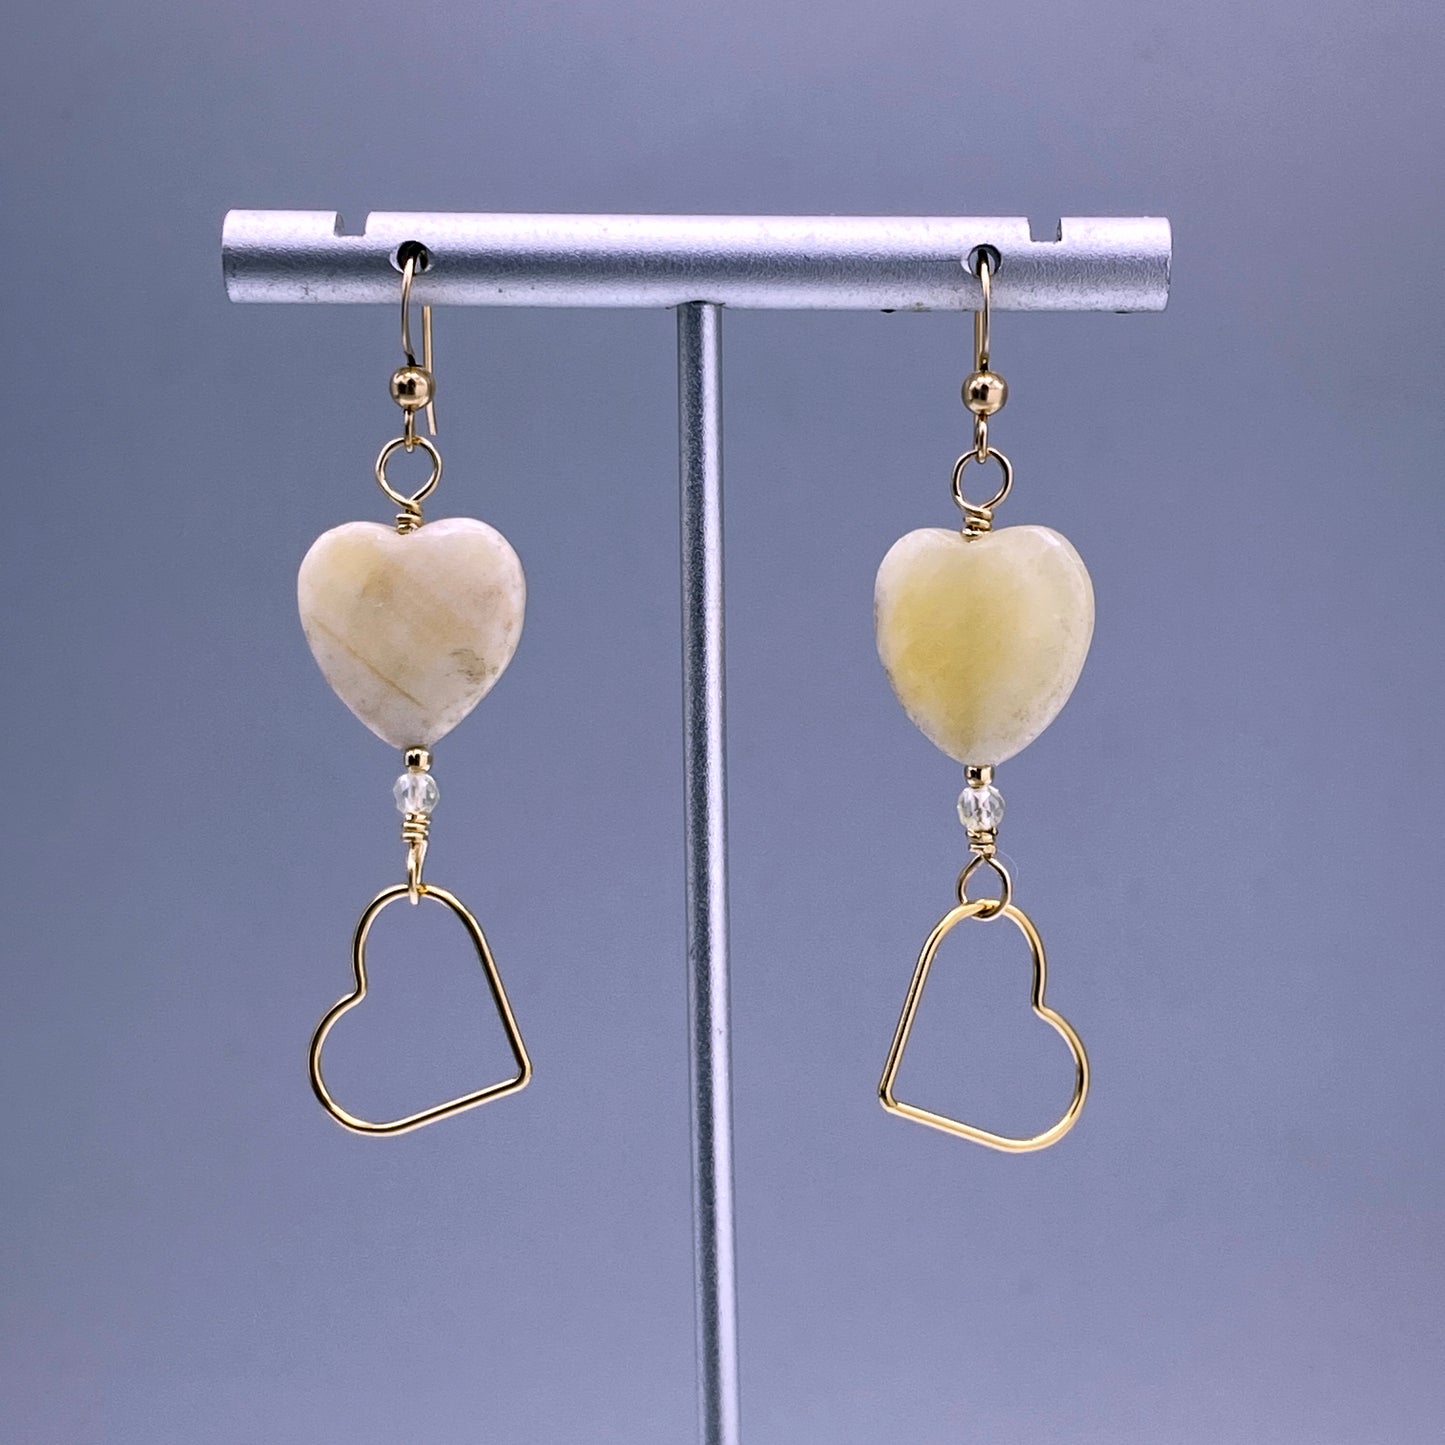 Yellow Topaz gemsotne and gold Heart Earrings